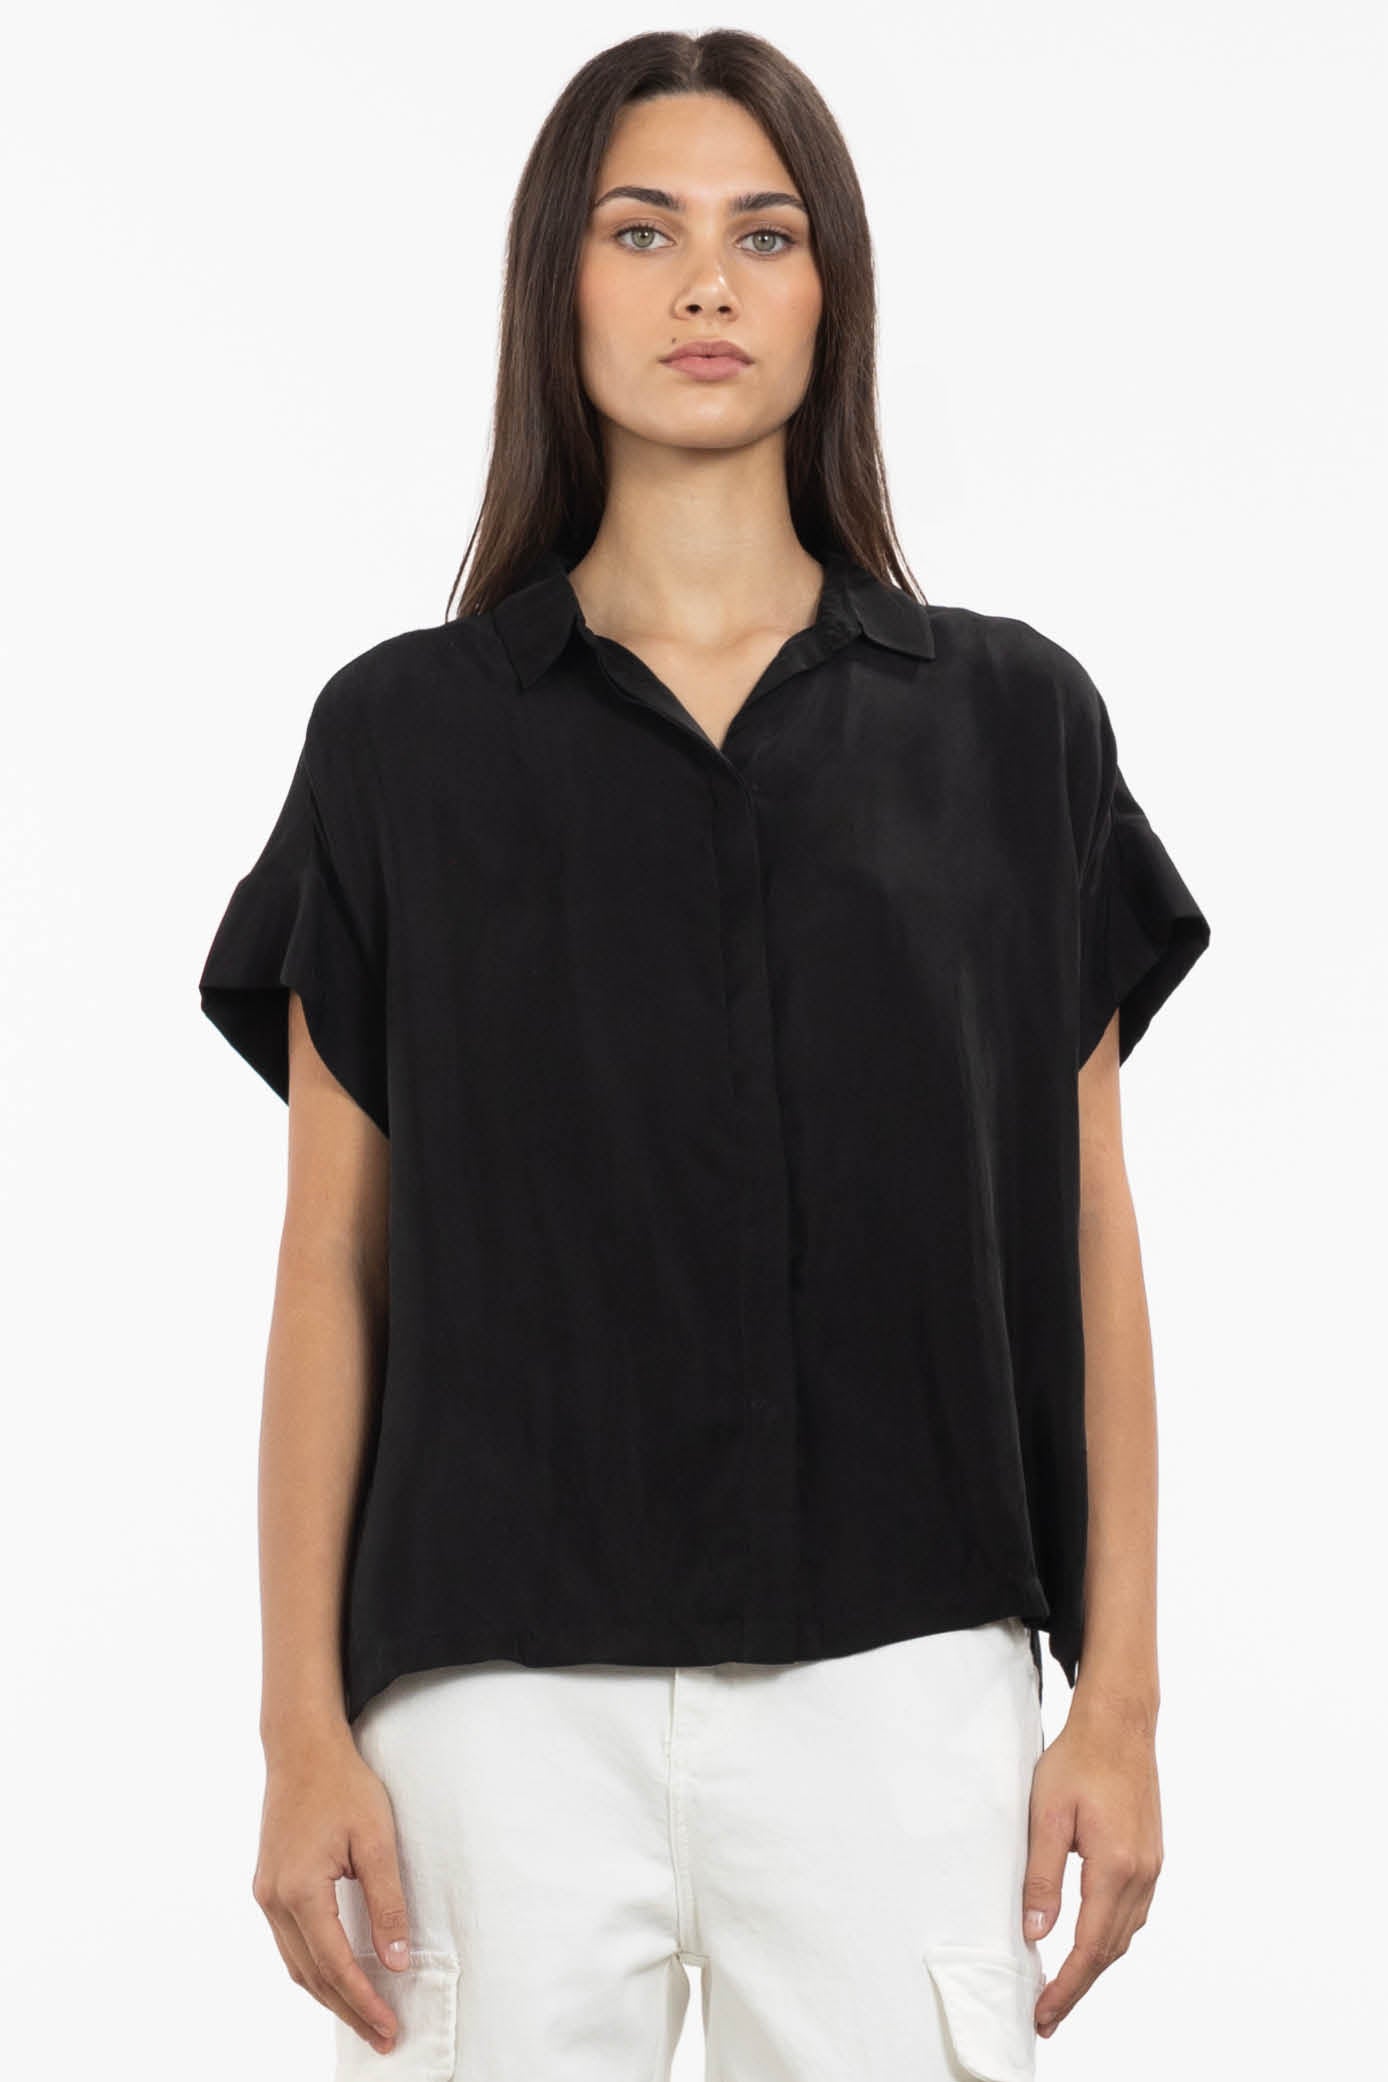 Onyx Short Sleeve Shirt in Black, REPERTOIRE